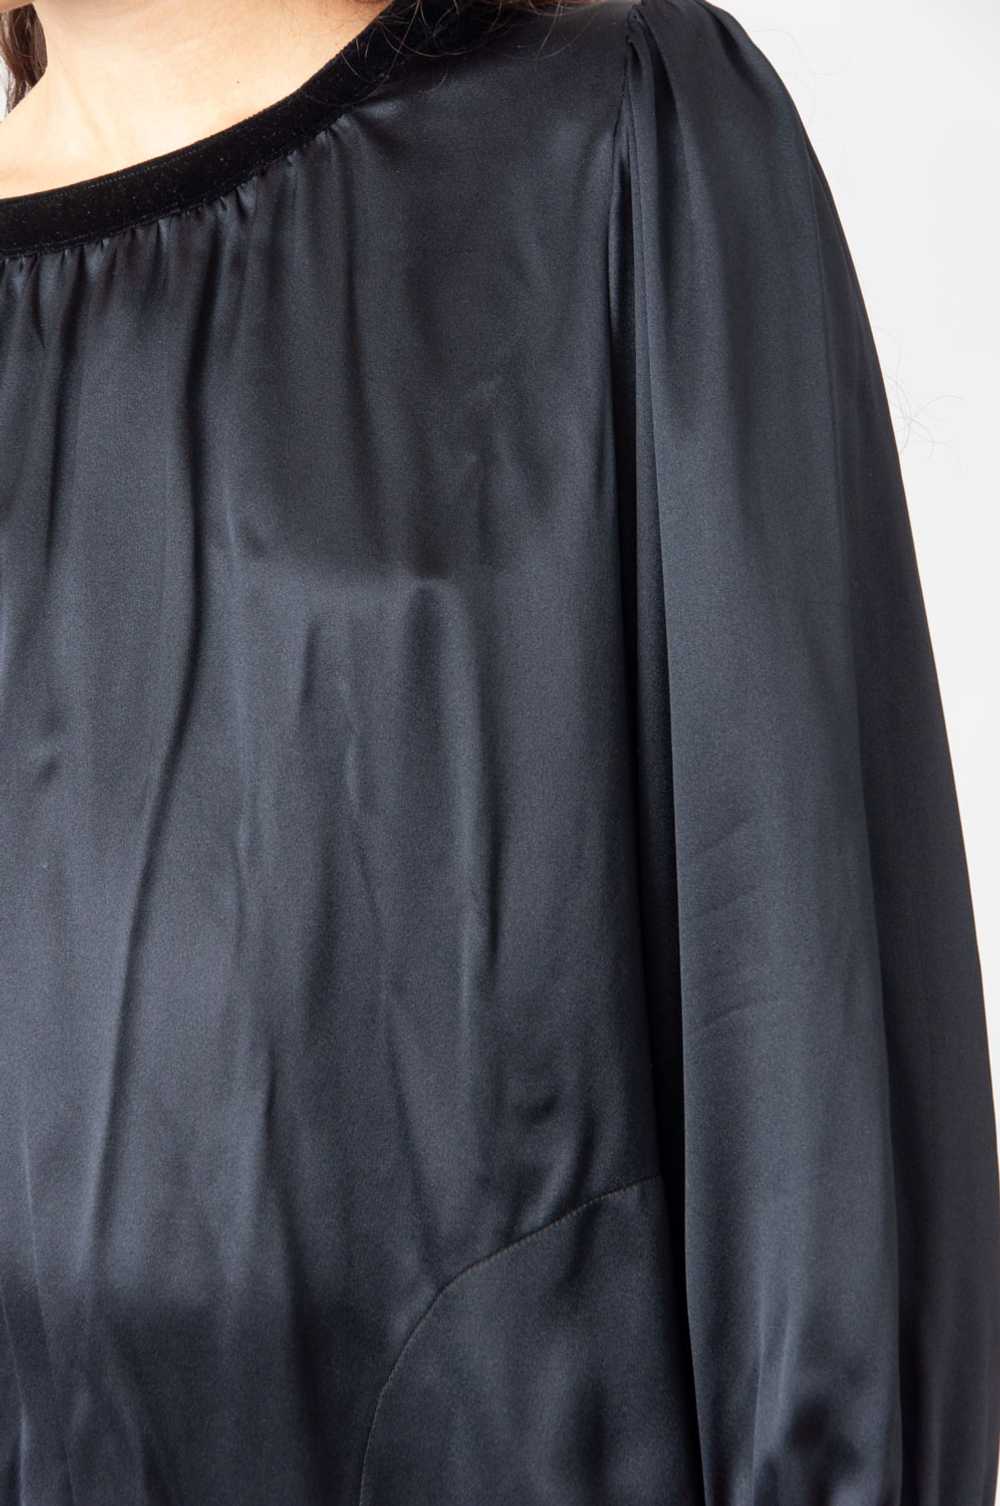 Alberto Aspesi Black silk dress - image 4